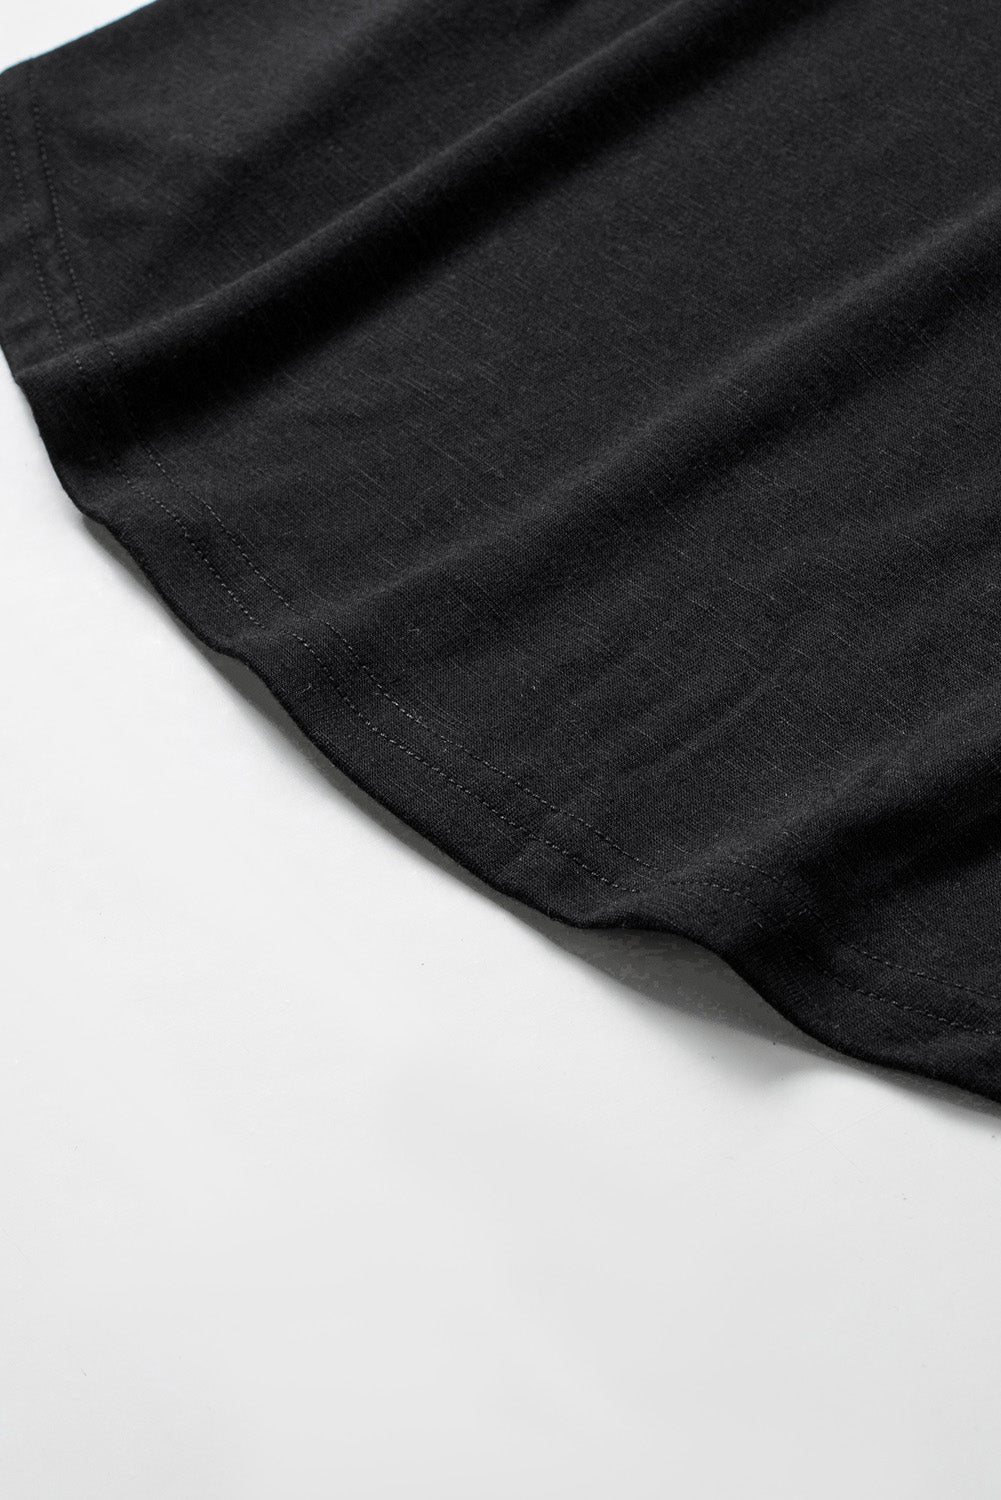 Black Solid Pocket Front Scoop Neck Short Sleeve T-shirt LC25213432-2